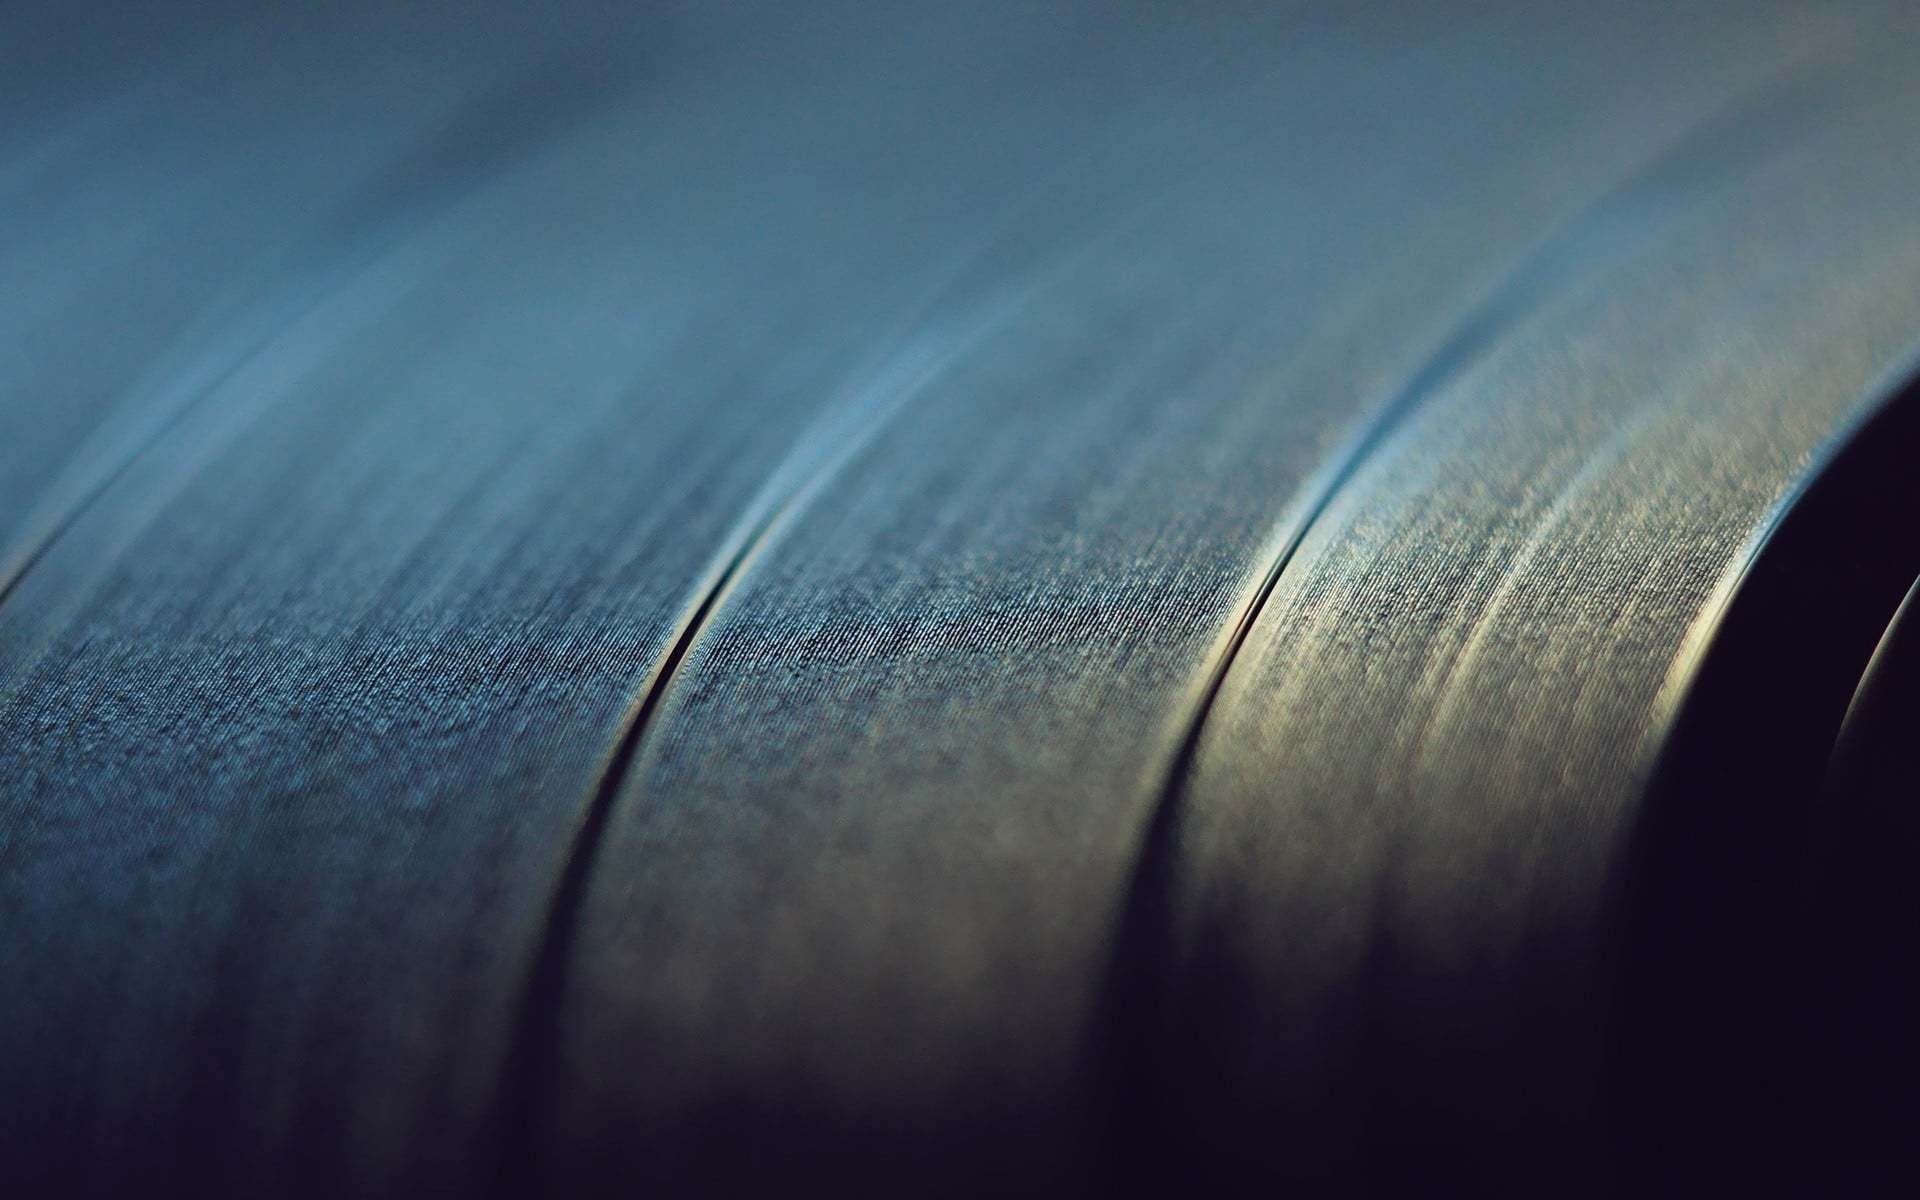 close up of vinyl record